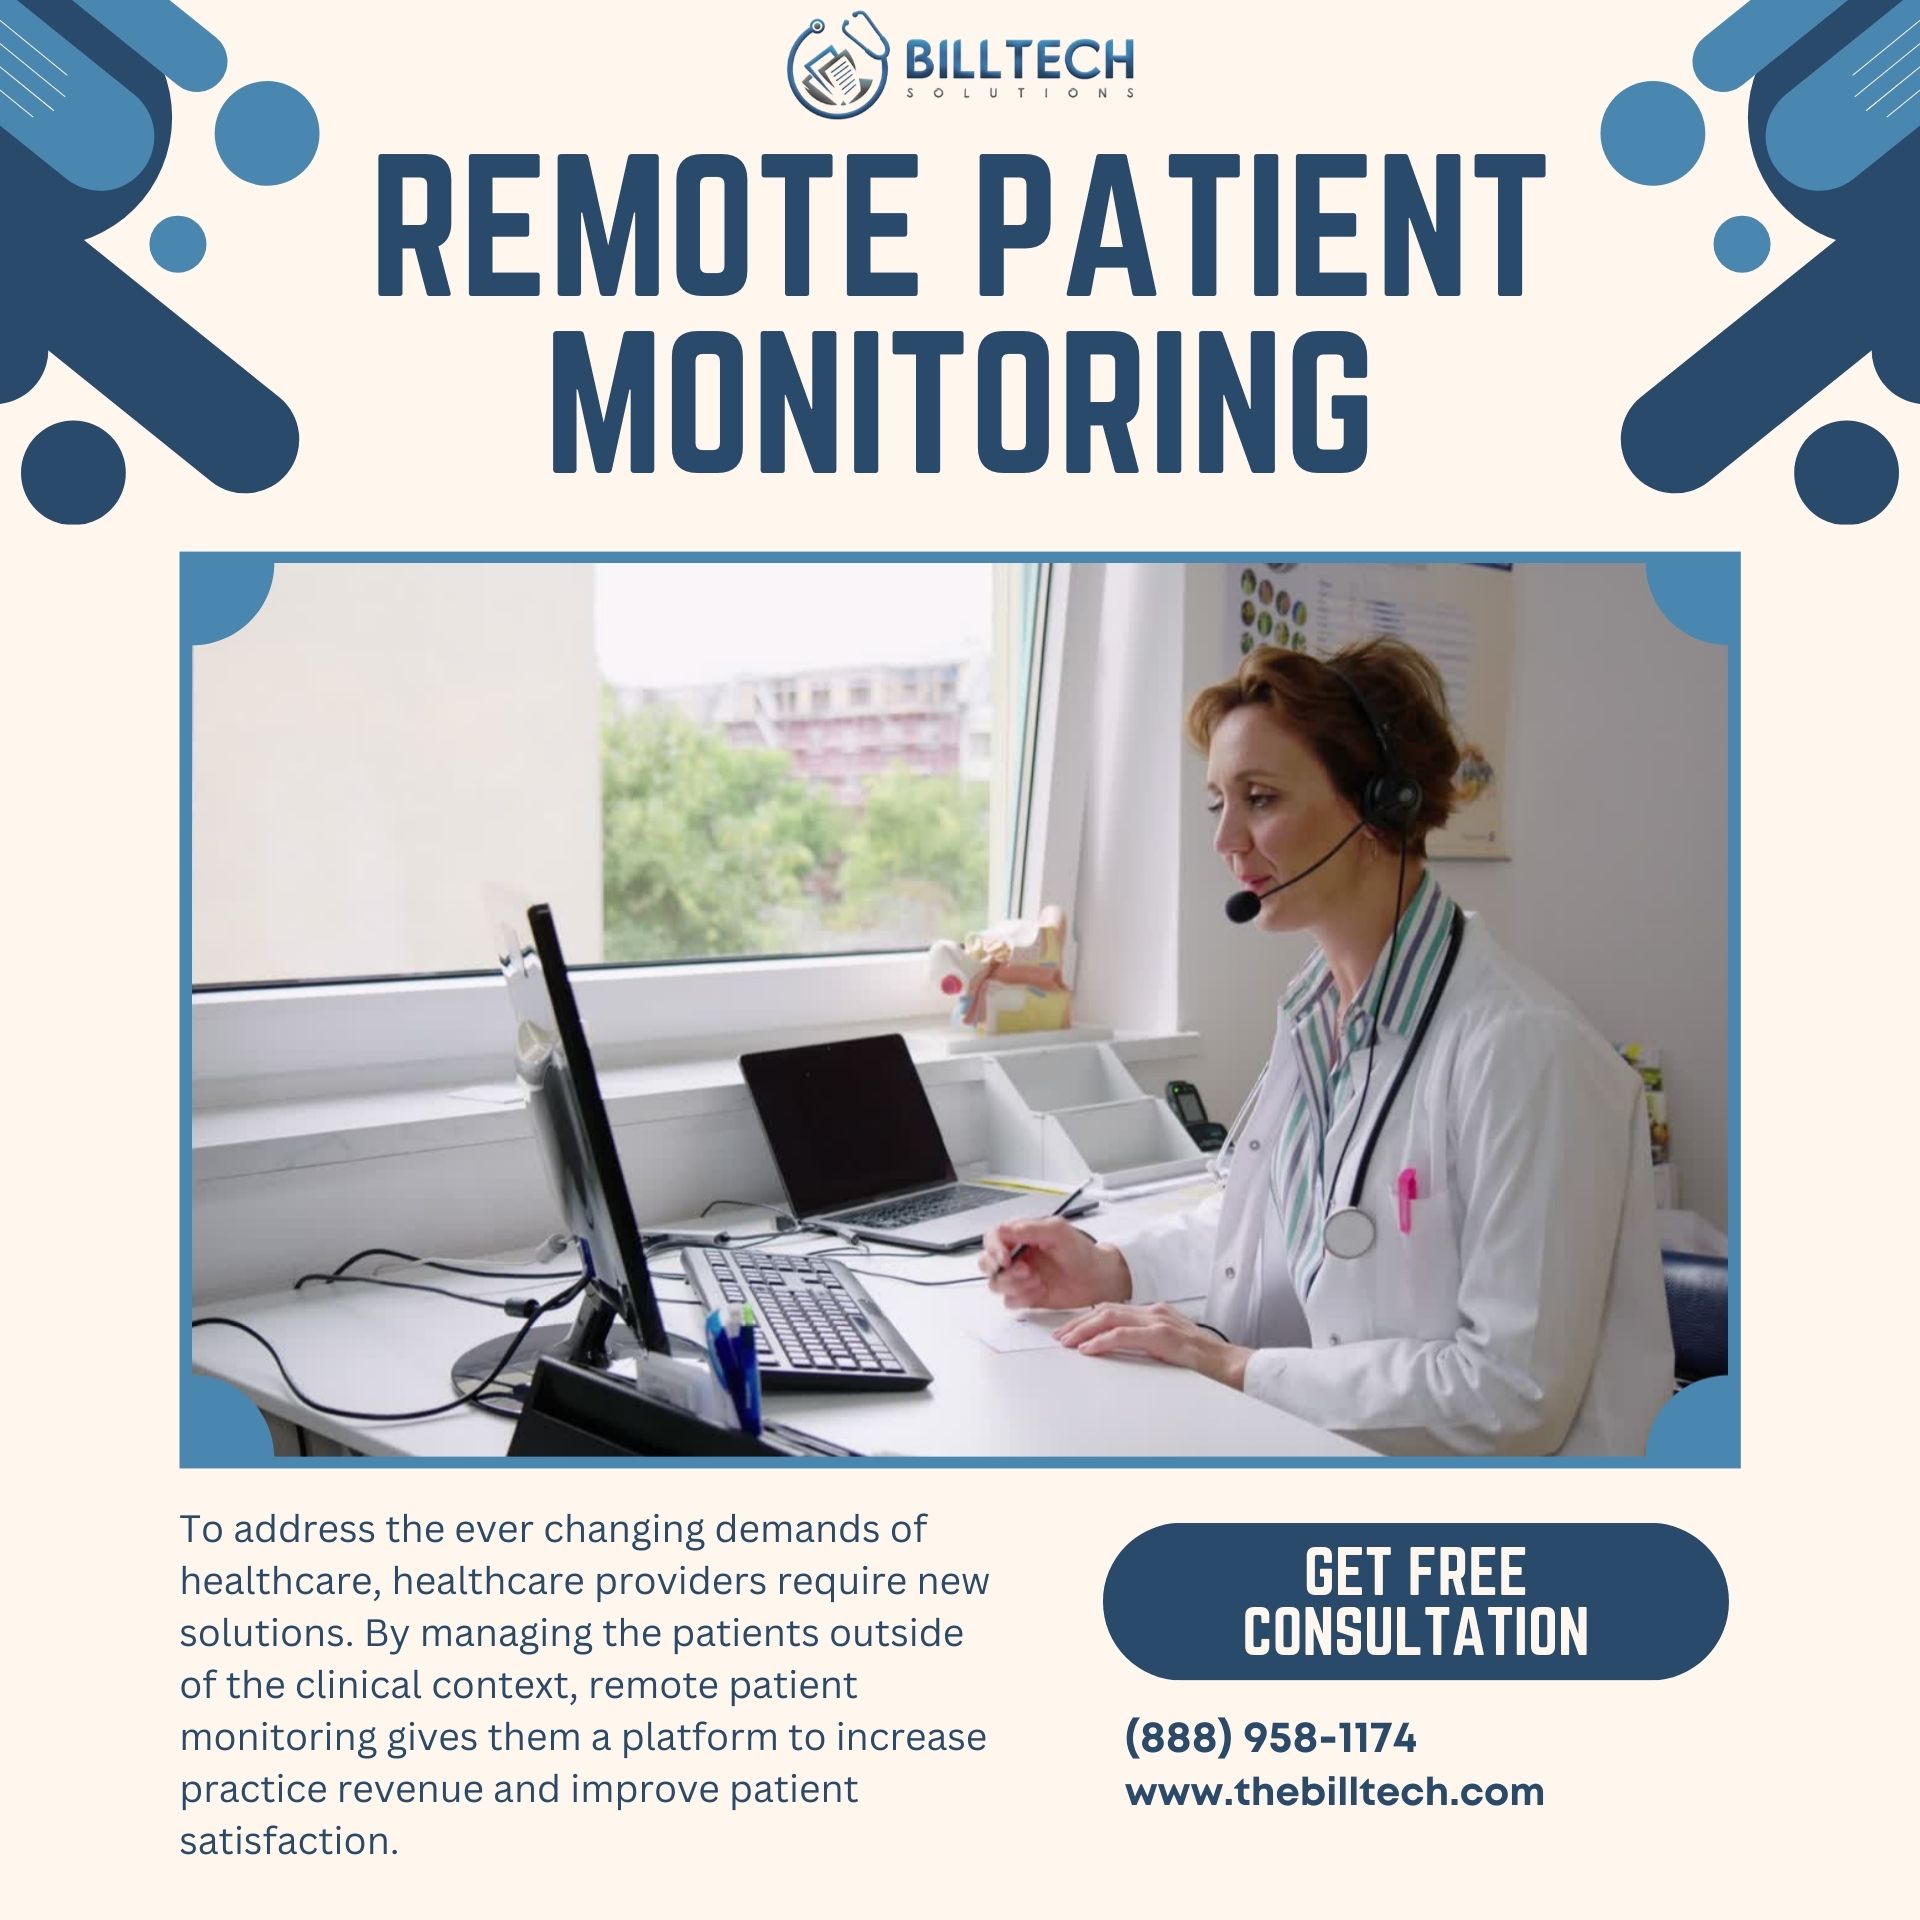 Remote Patient Monitoring - Billtech Solutions USA